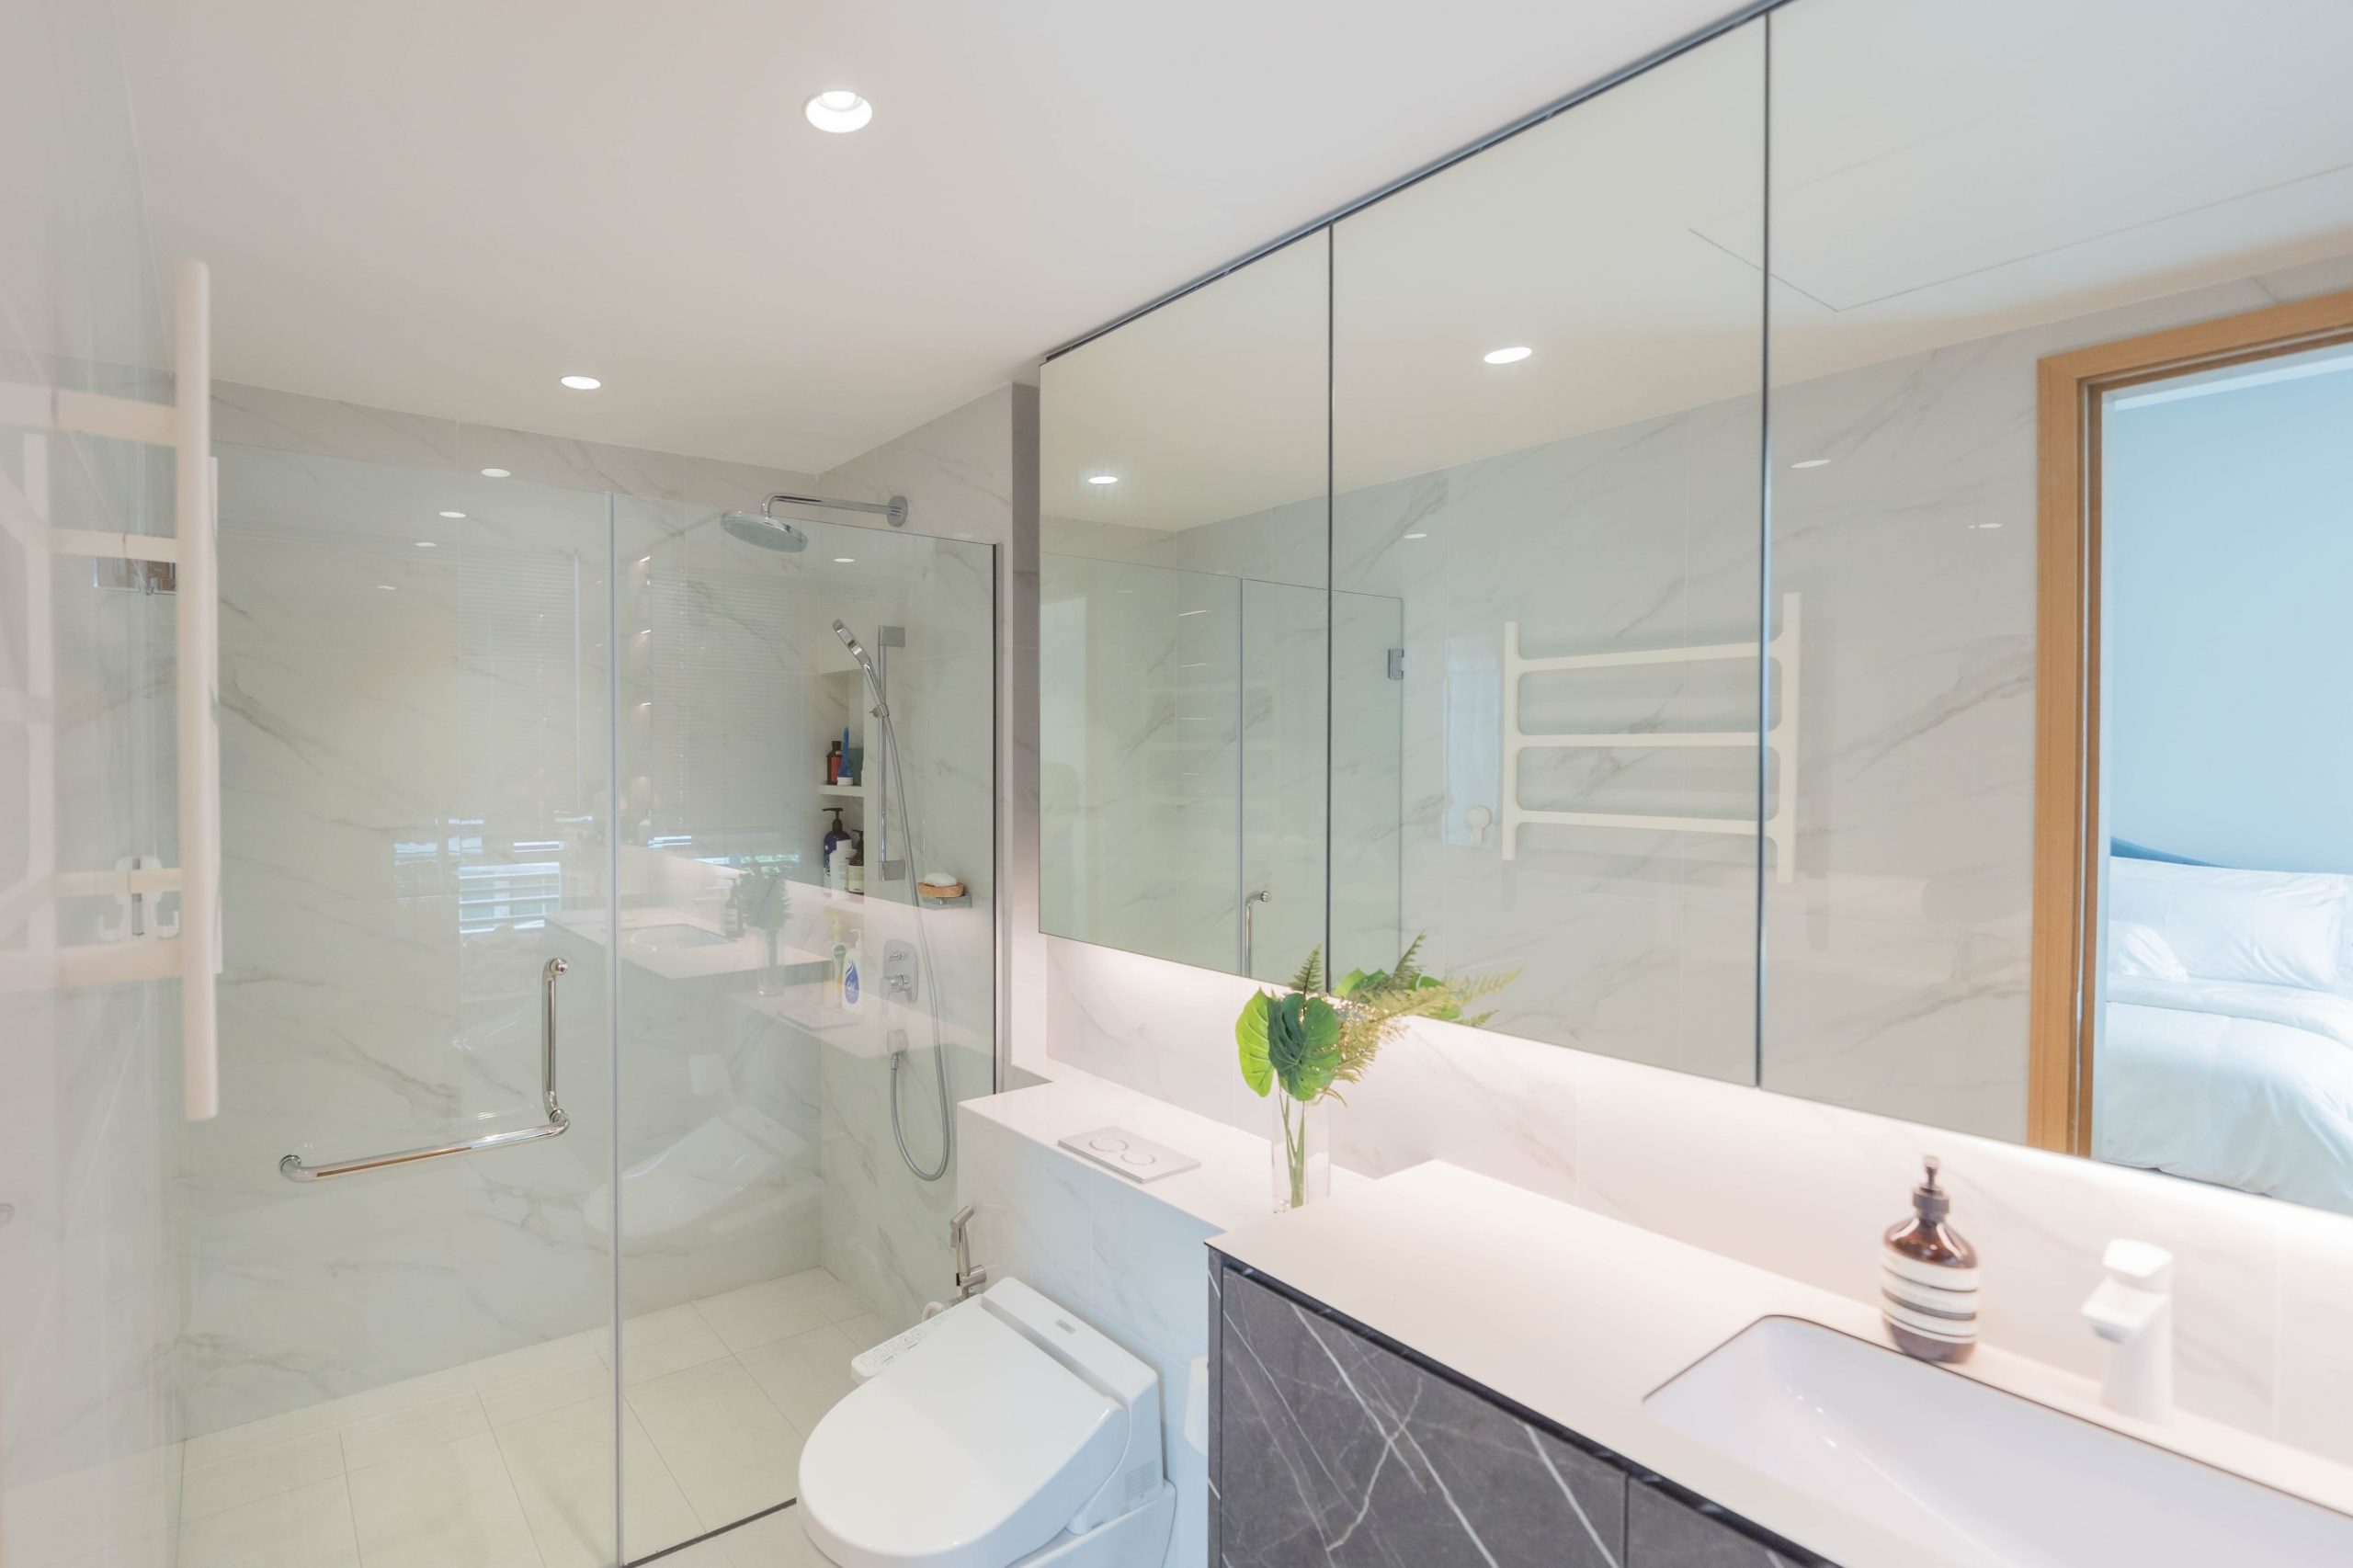 5 Sink Ideas for Your Bathroom Interior